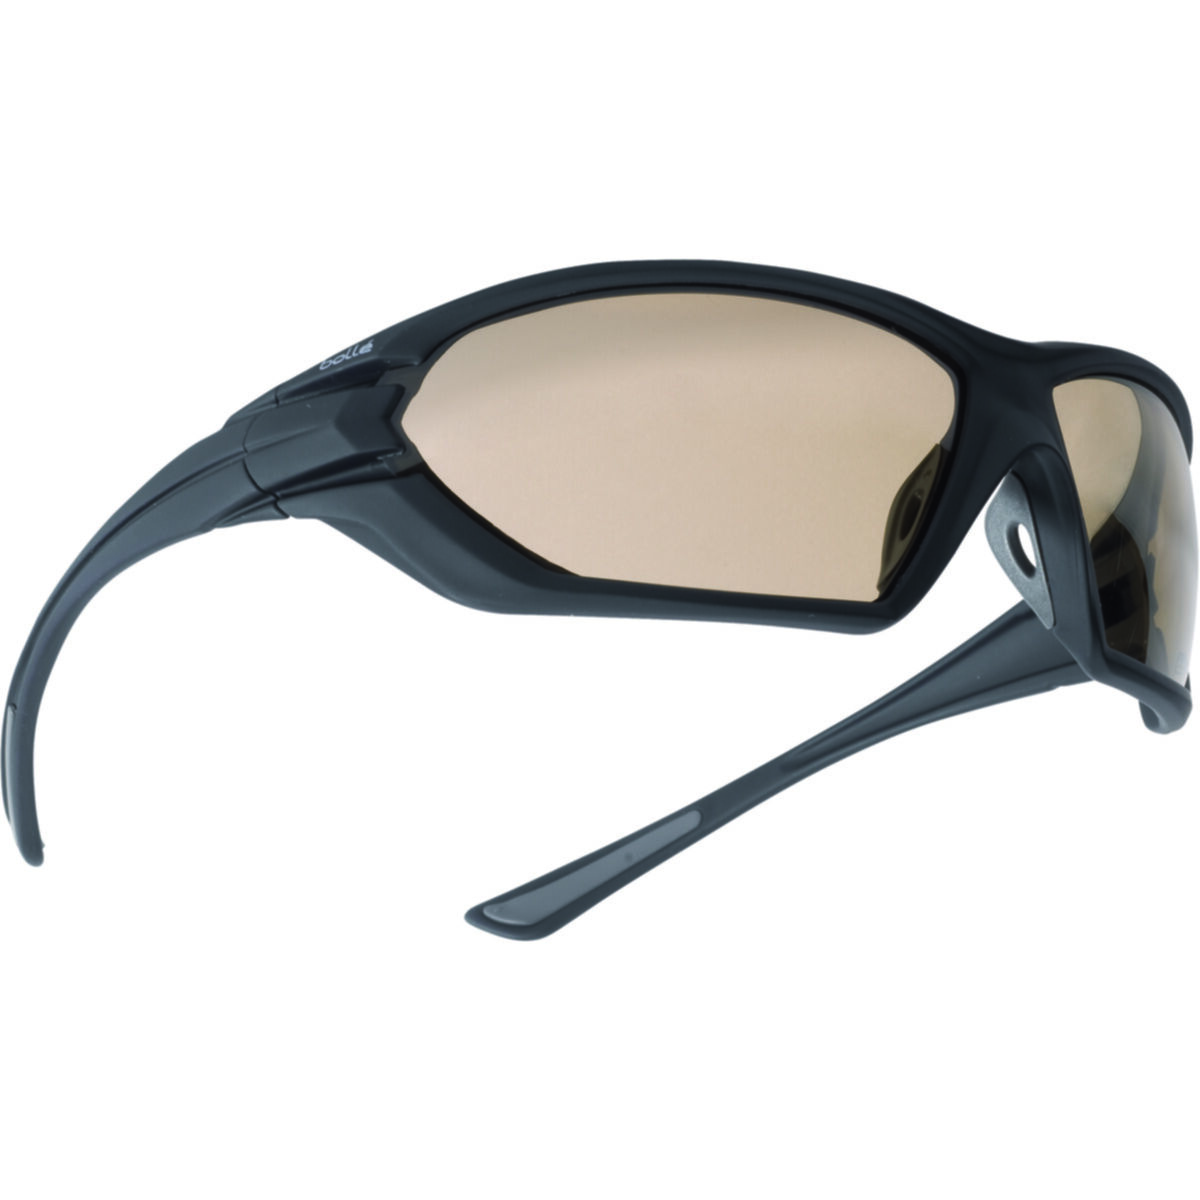 GUNFIRE 2.0 Ballistic glasses kit | Bollé Safety